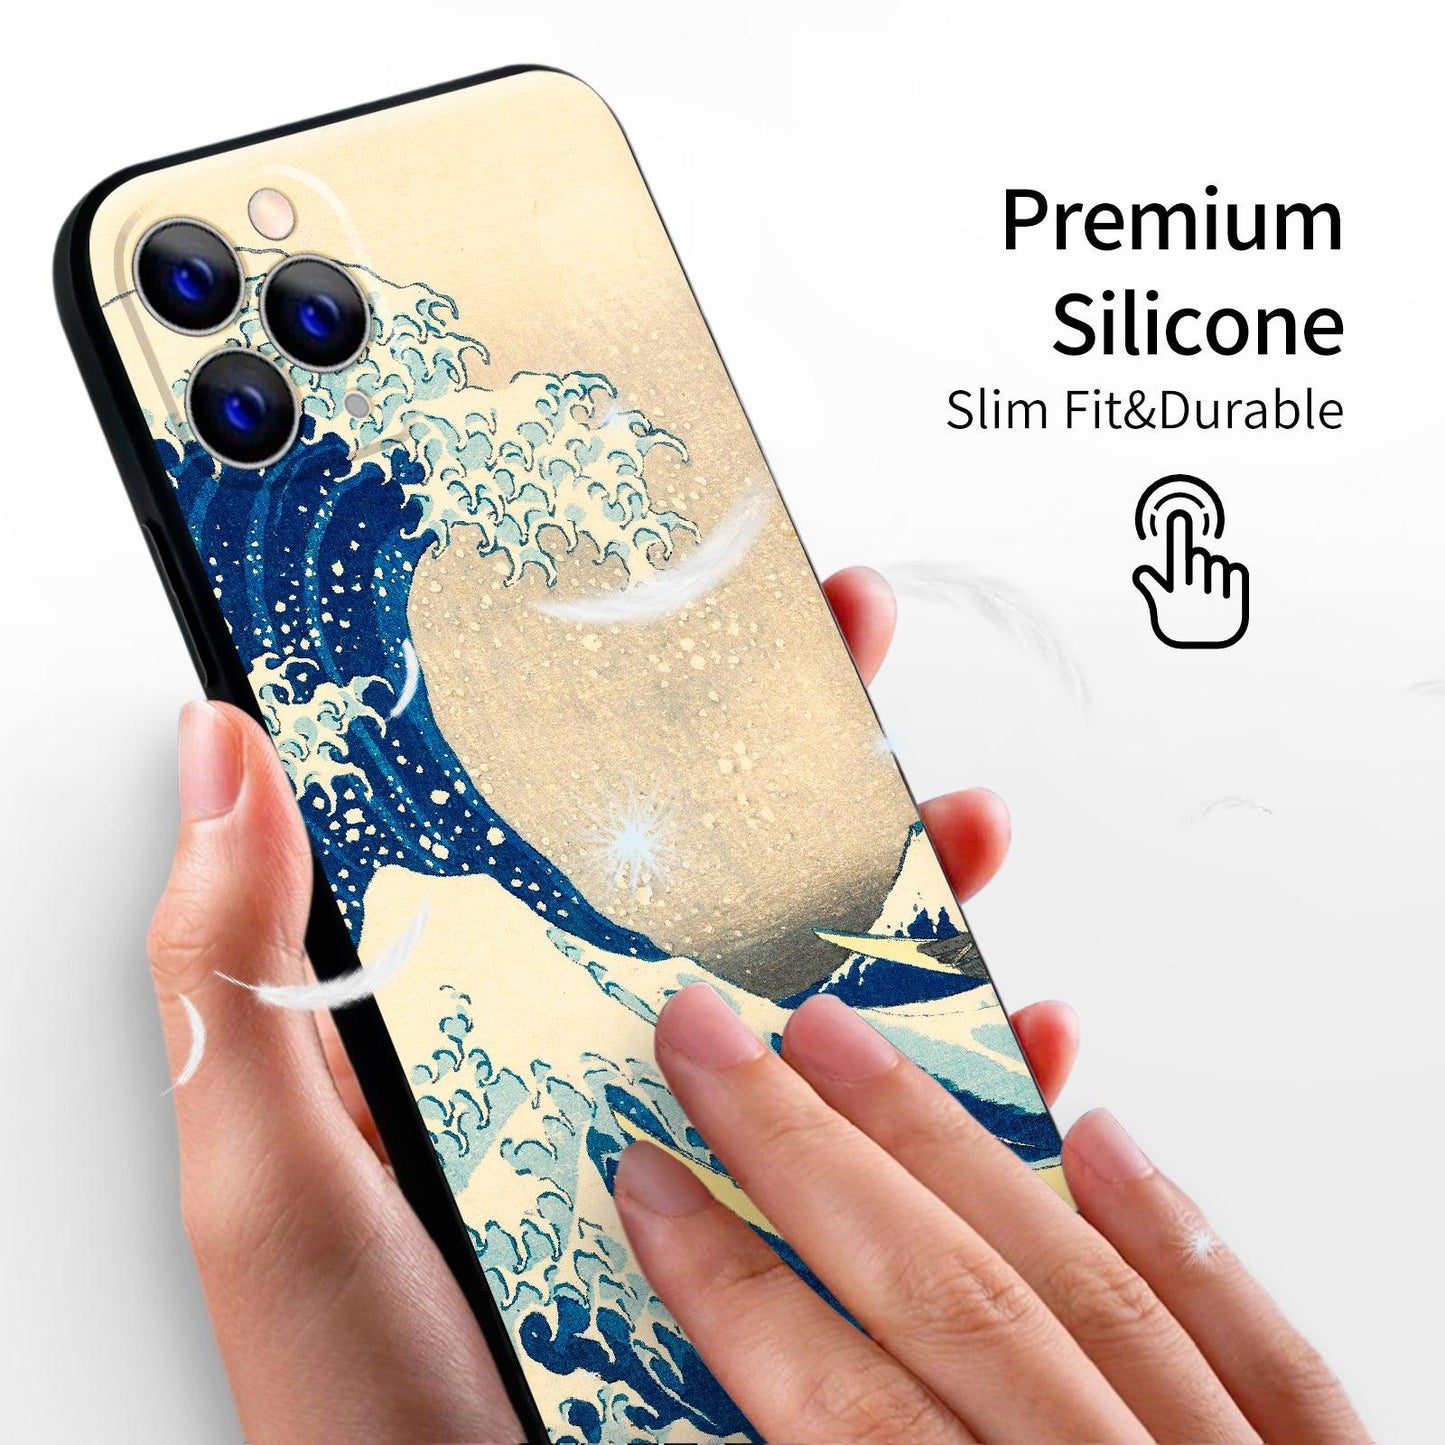 iPhone 11 Pro Cute Silicone Case(Under The Wave Off Kanagawa The Great Wave by Katsushika Hokusai) - Berkin Arts